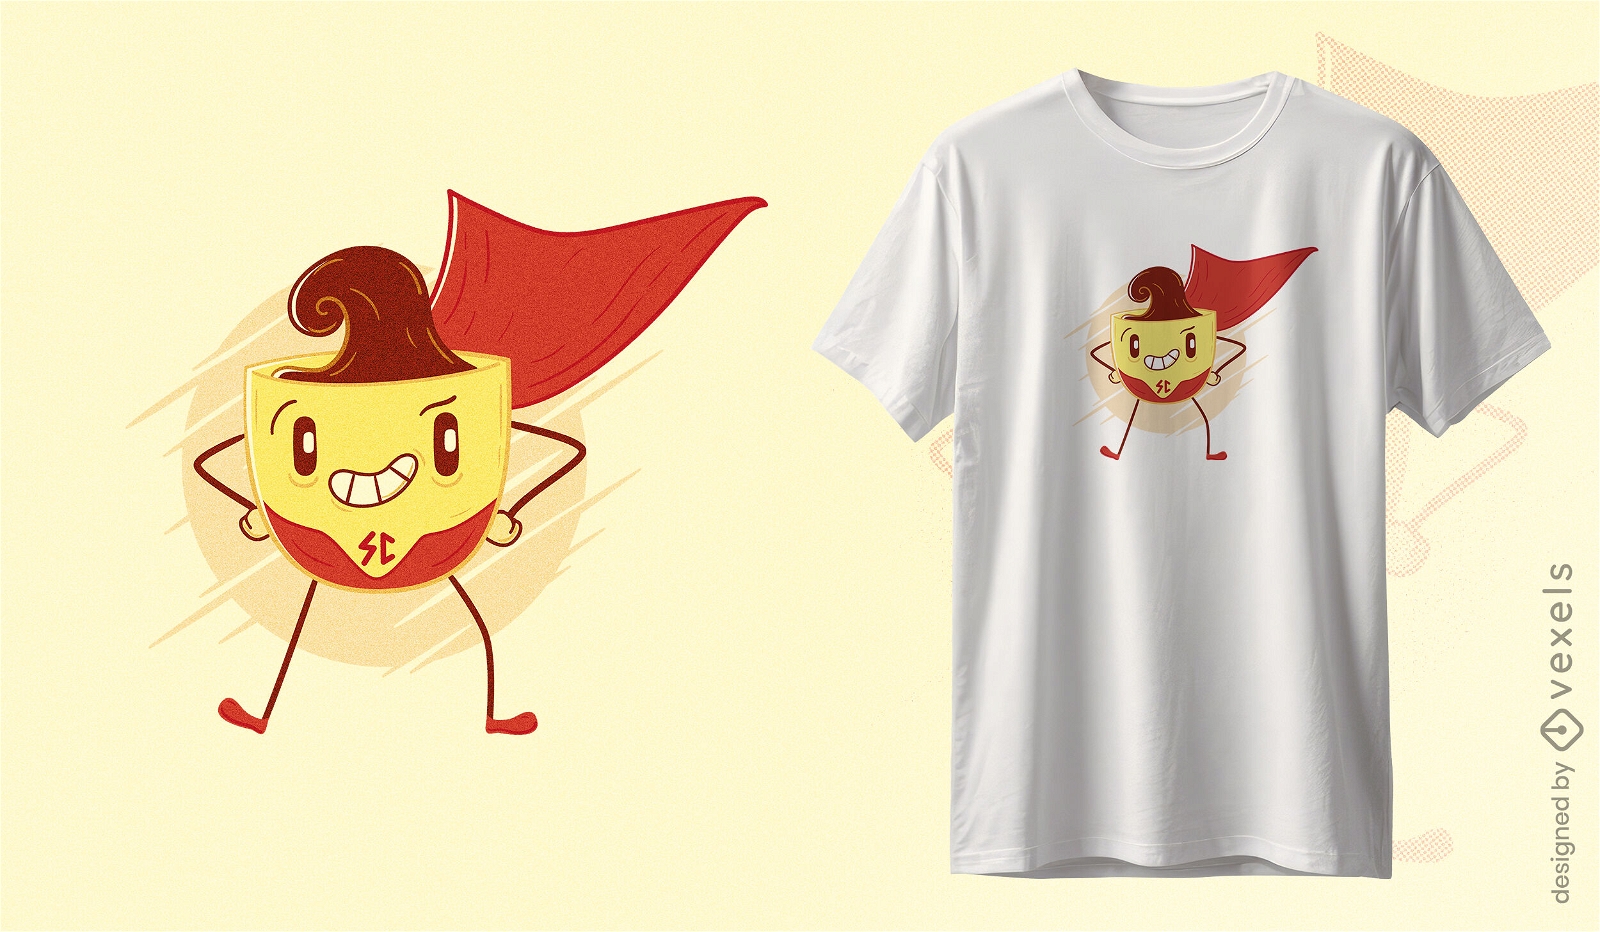 Super coffee cup hero t-shirt design